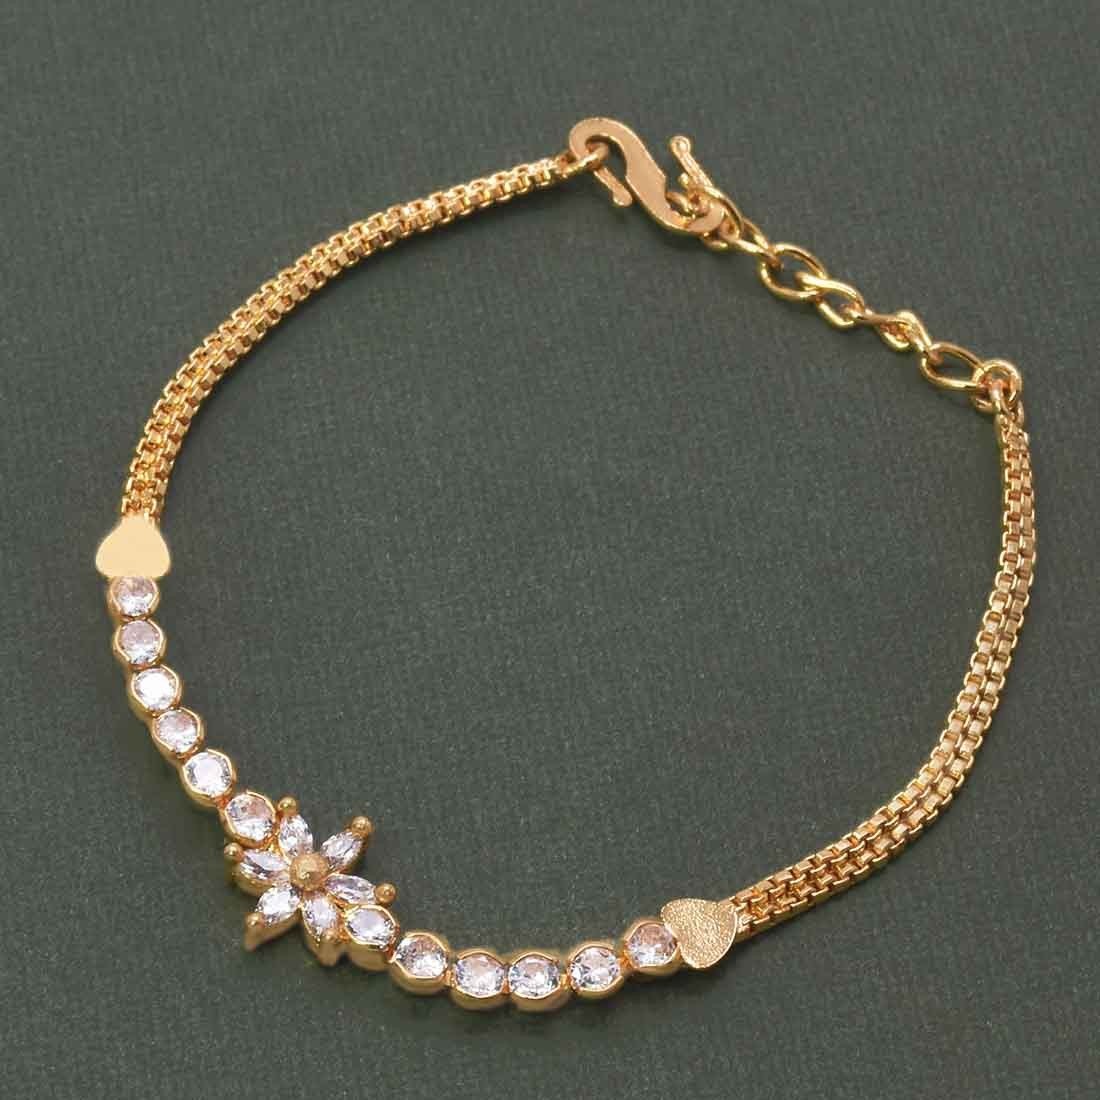 Buy Bracelets For Women in India from Sukkhi - Bracelets Online - Sukkhi.com